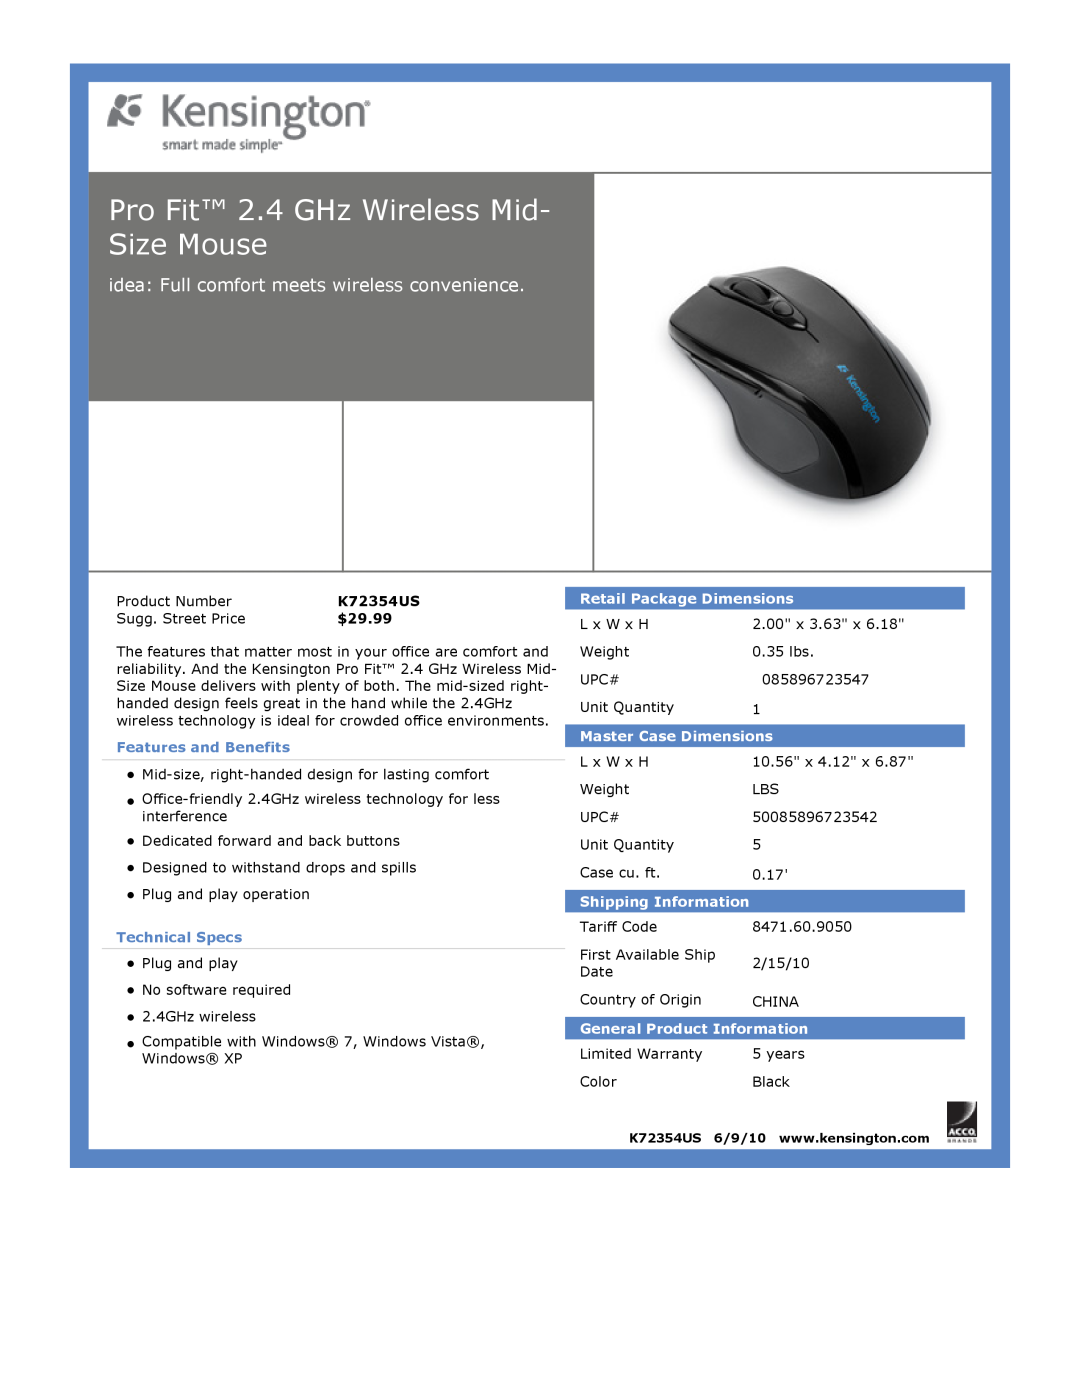 Kensington EU64325 Pro Fit 2.4 GHz Wireless Mid- Size Mouse, idea: Full comfort meets wireless convenience, $29.99 